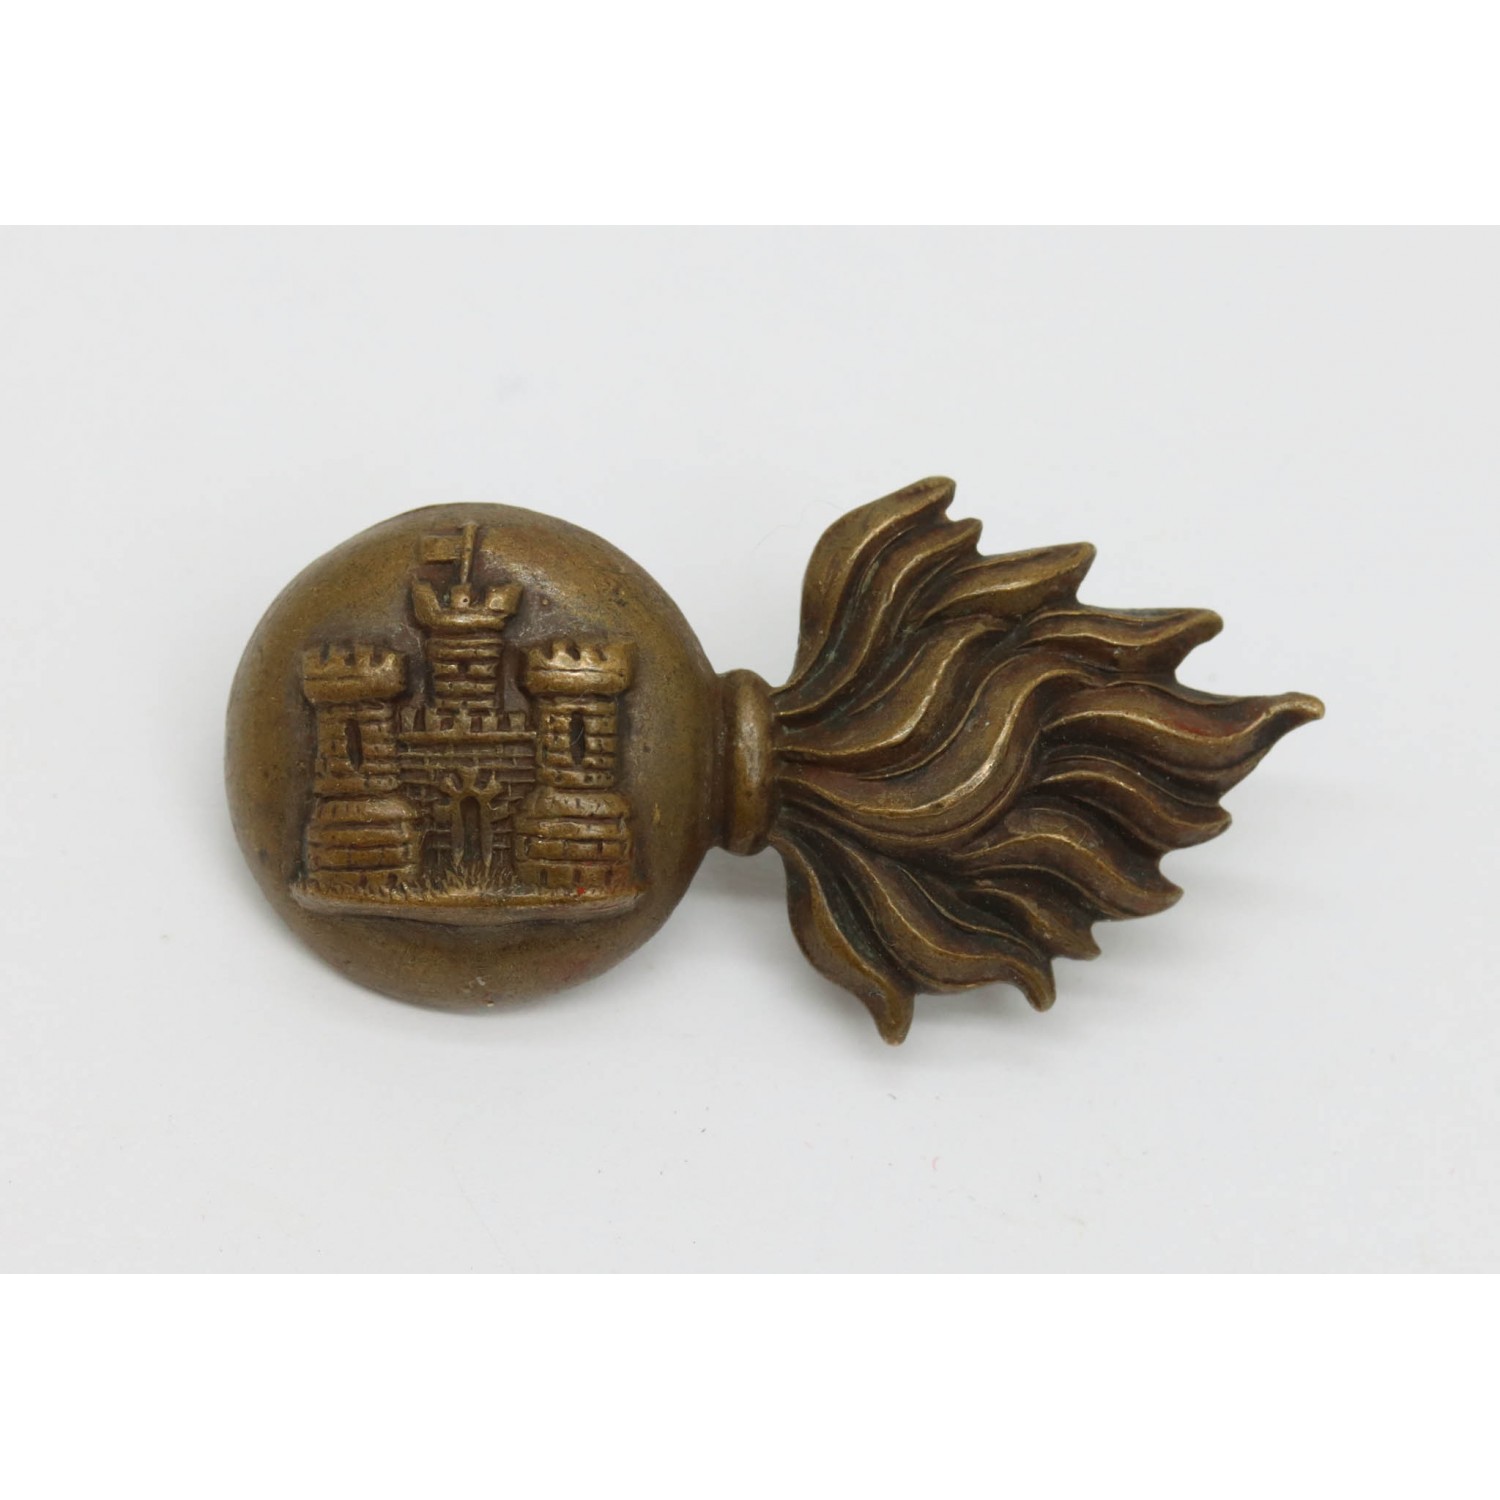 Victorian Royal Inniskilling Fusiliers Collar Badge